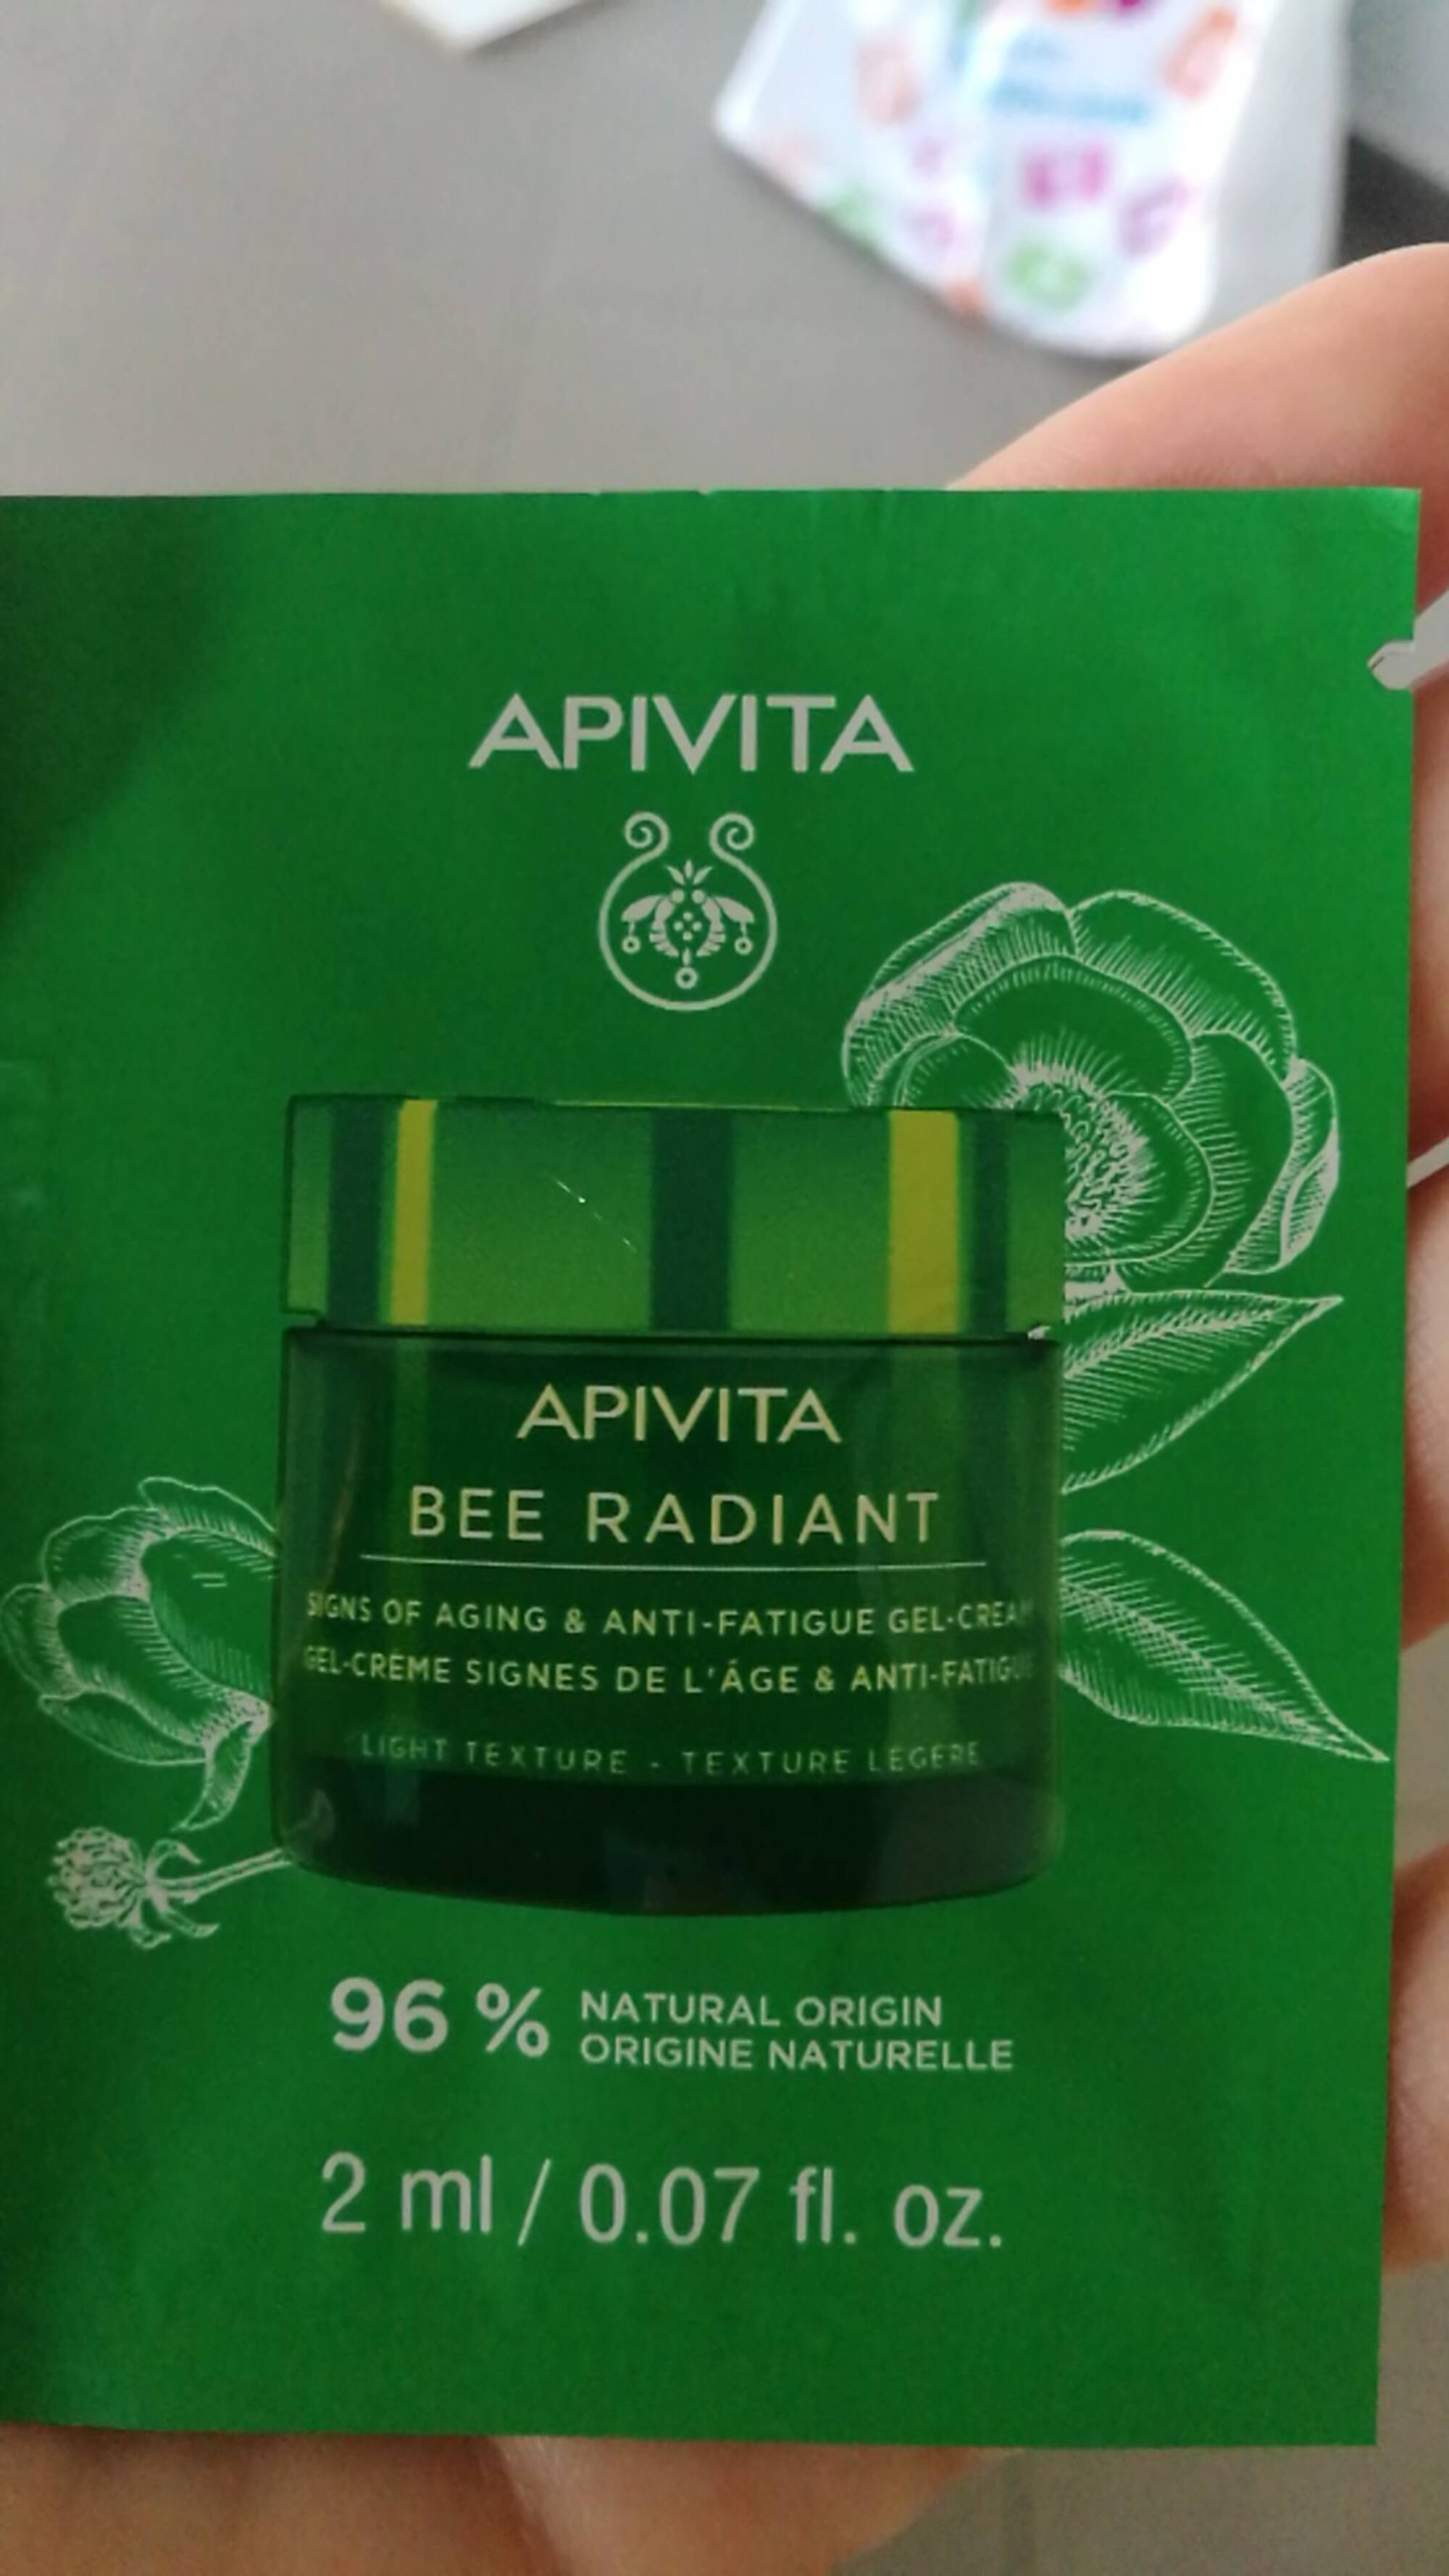 APIVITA - Bee radiant - Gel-crème signes de l'âge & anti-fatigue